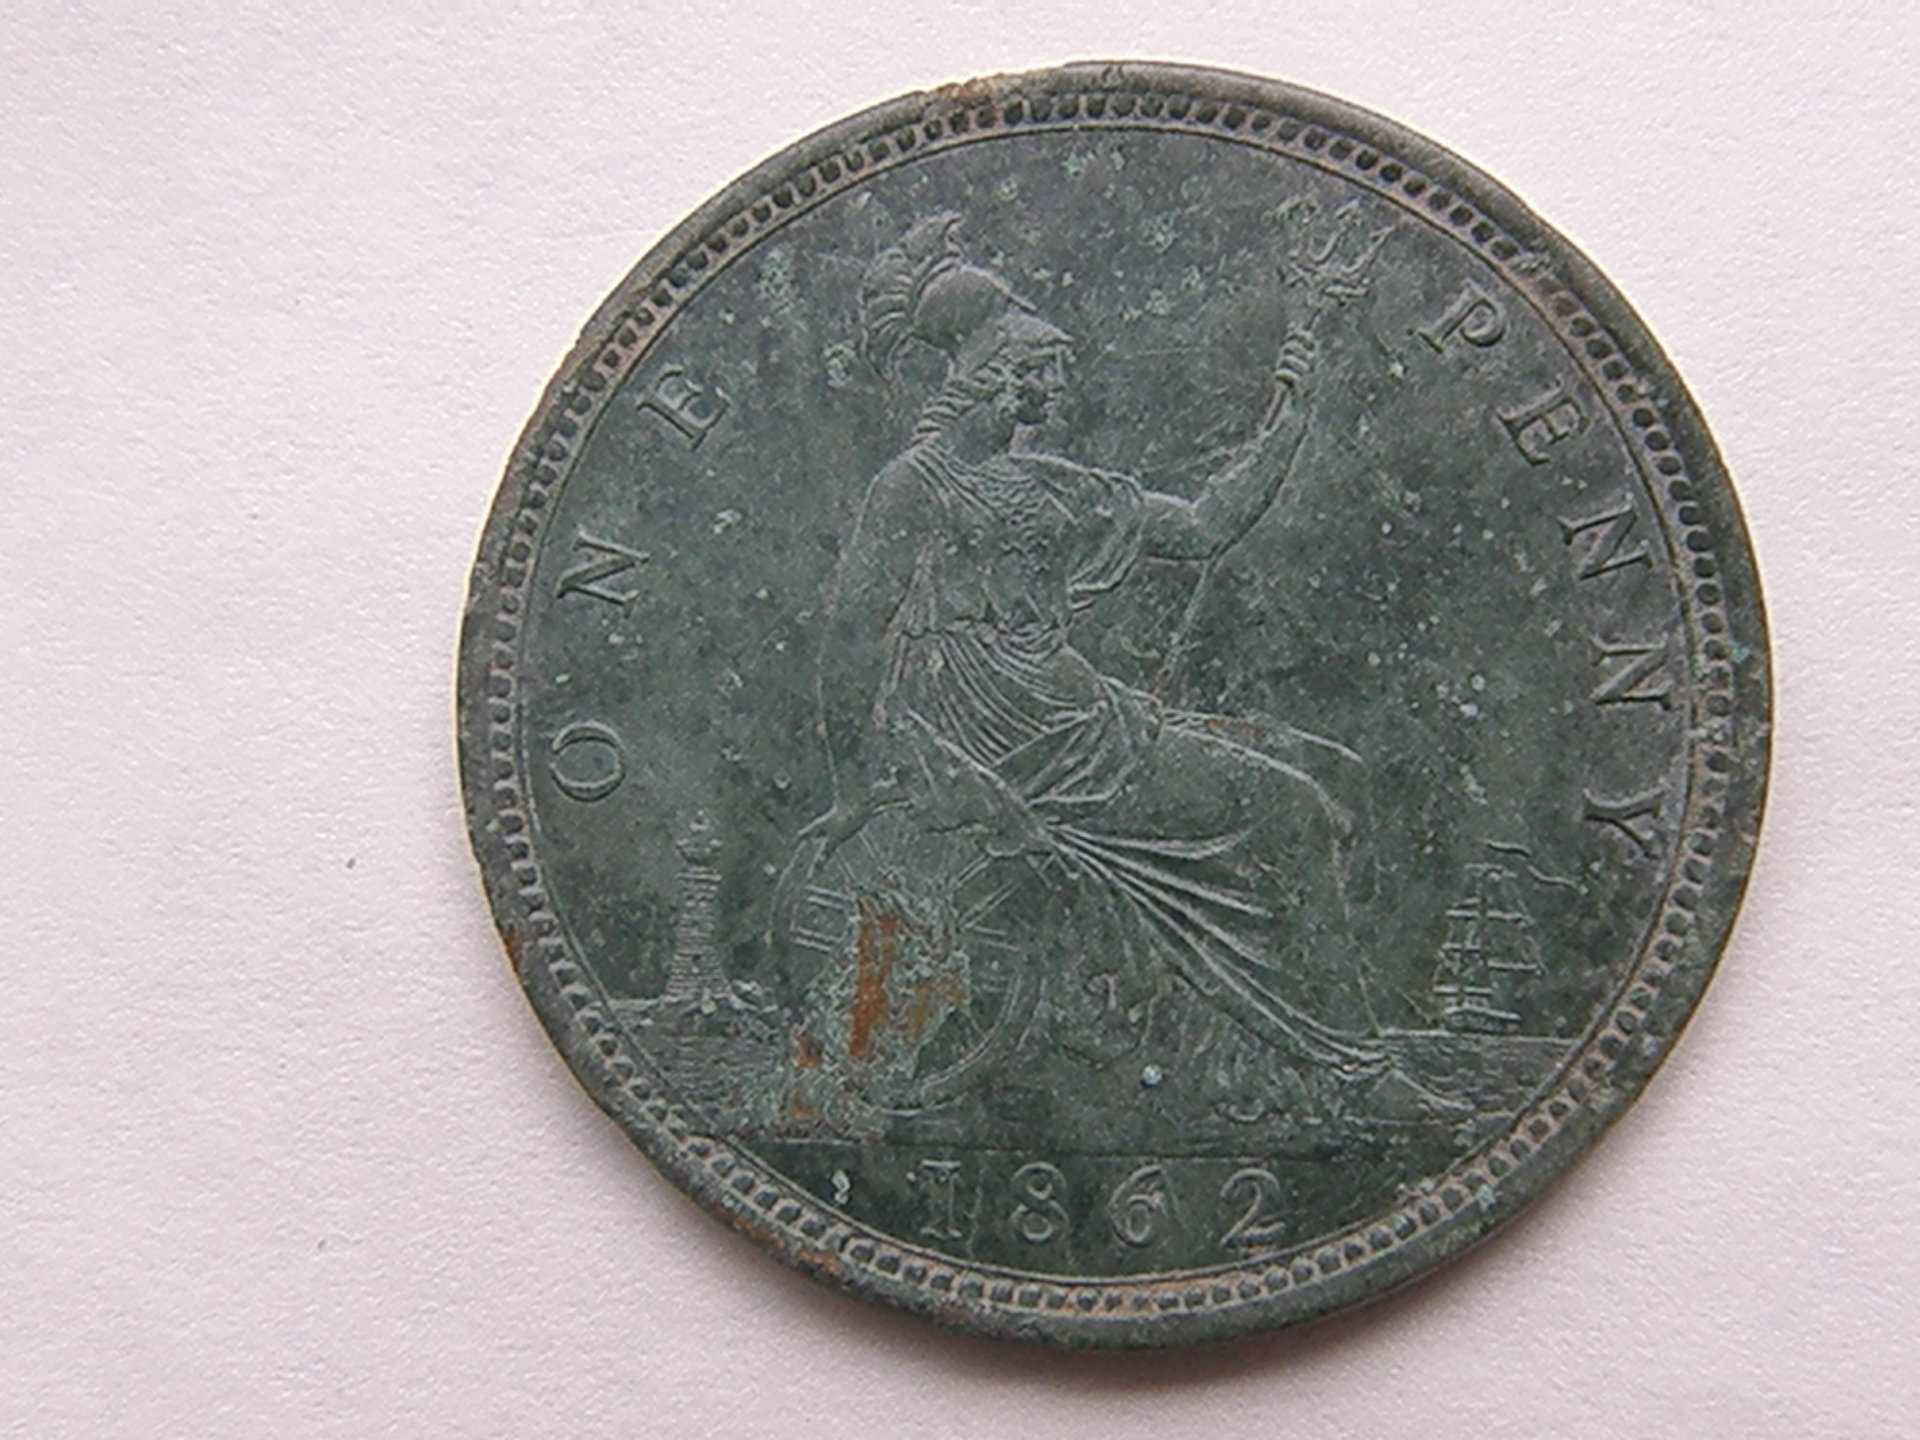 Victoria 1862 penny, common as muck or rare? | Coin Talk